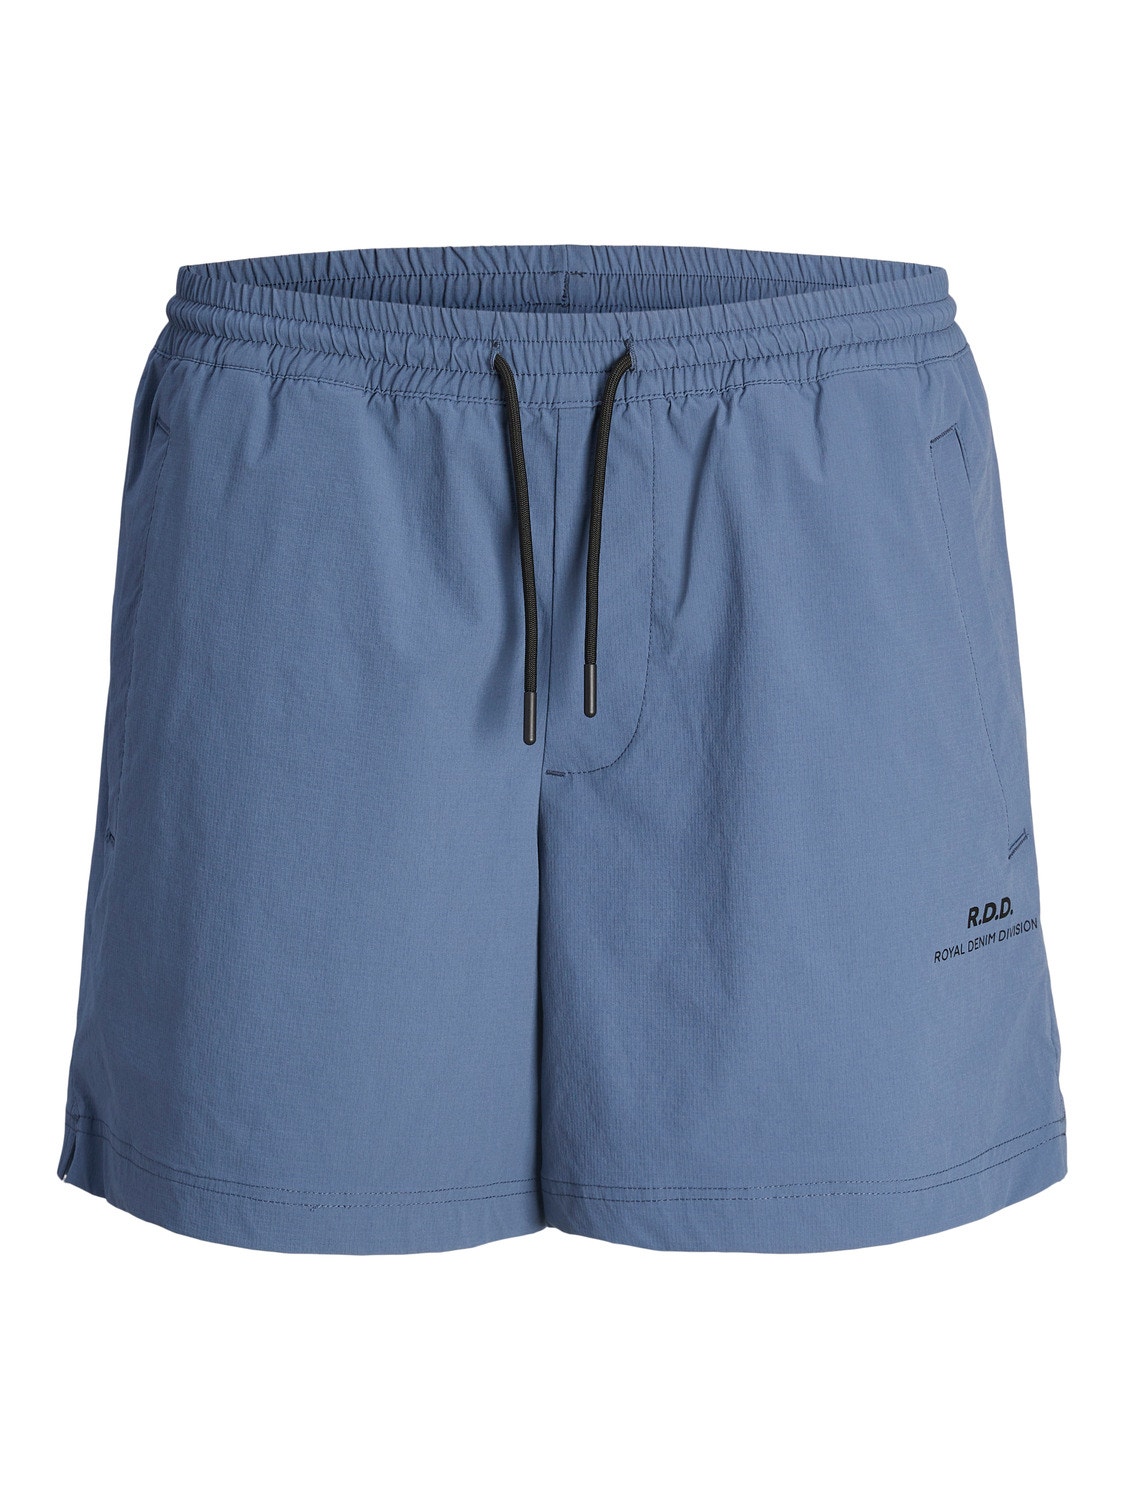 Jack & Jones RDD Regular Fit Sweat shorts -Vintage Indigo - 12232640